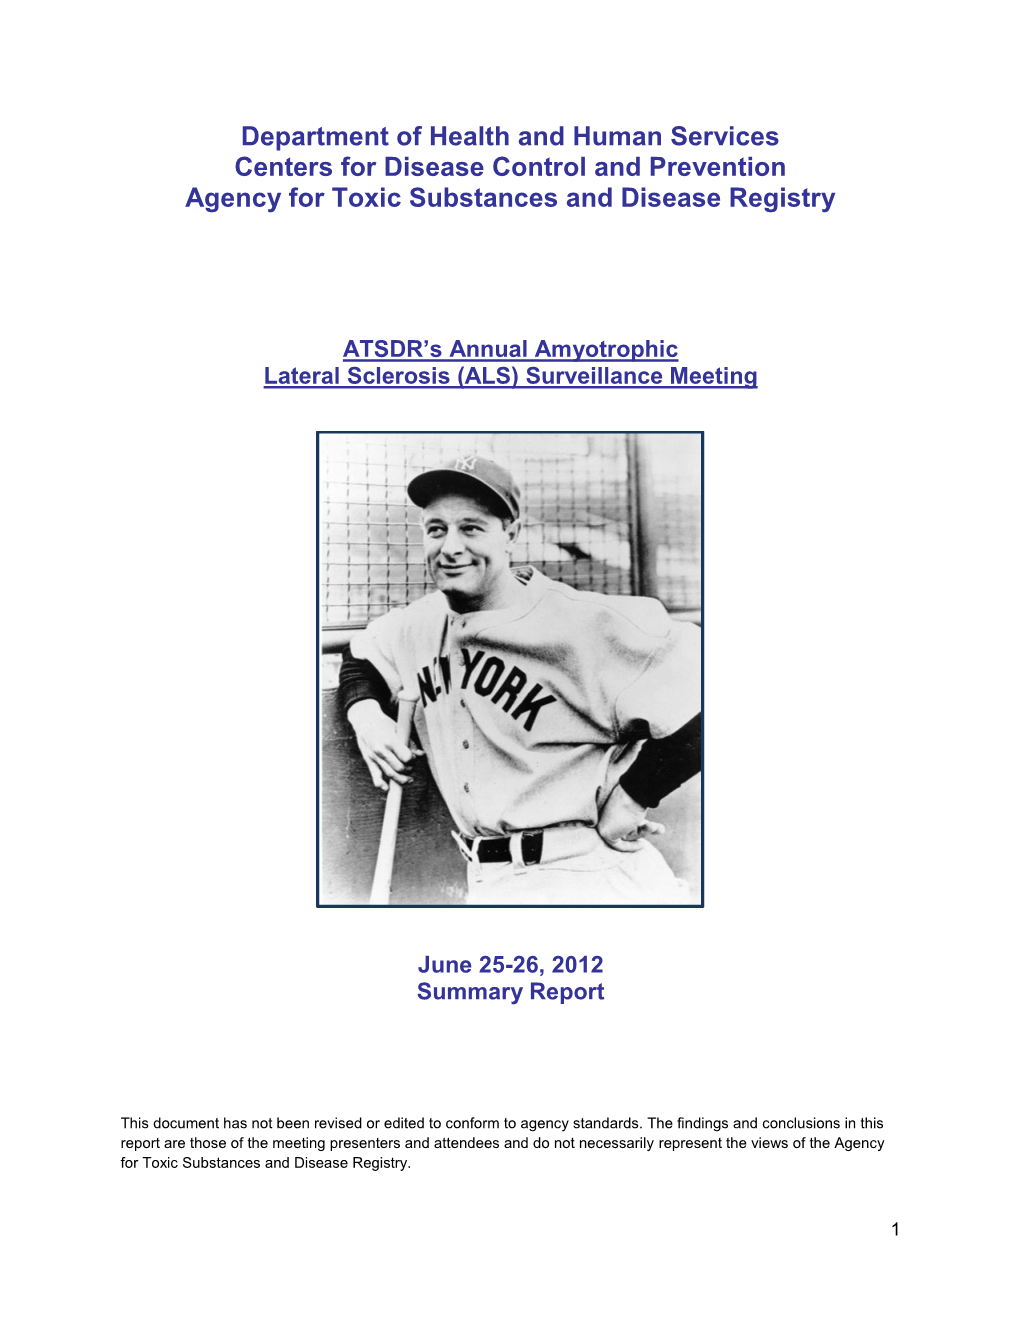 2012 ALS Annual Meeting Summary Report Pdf Icon[PDF – 2